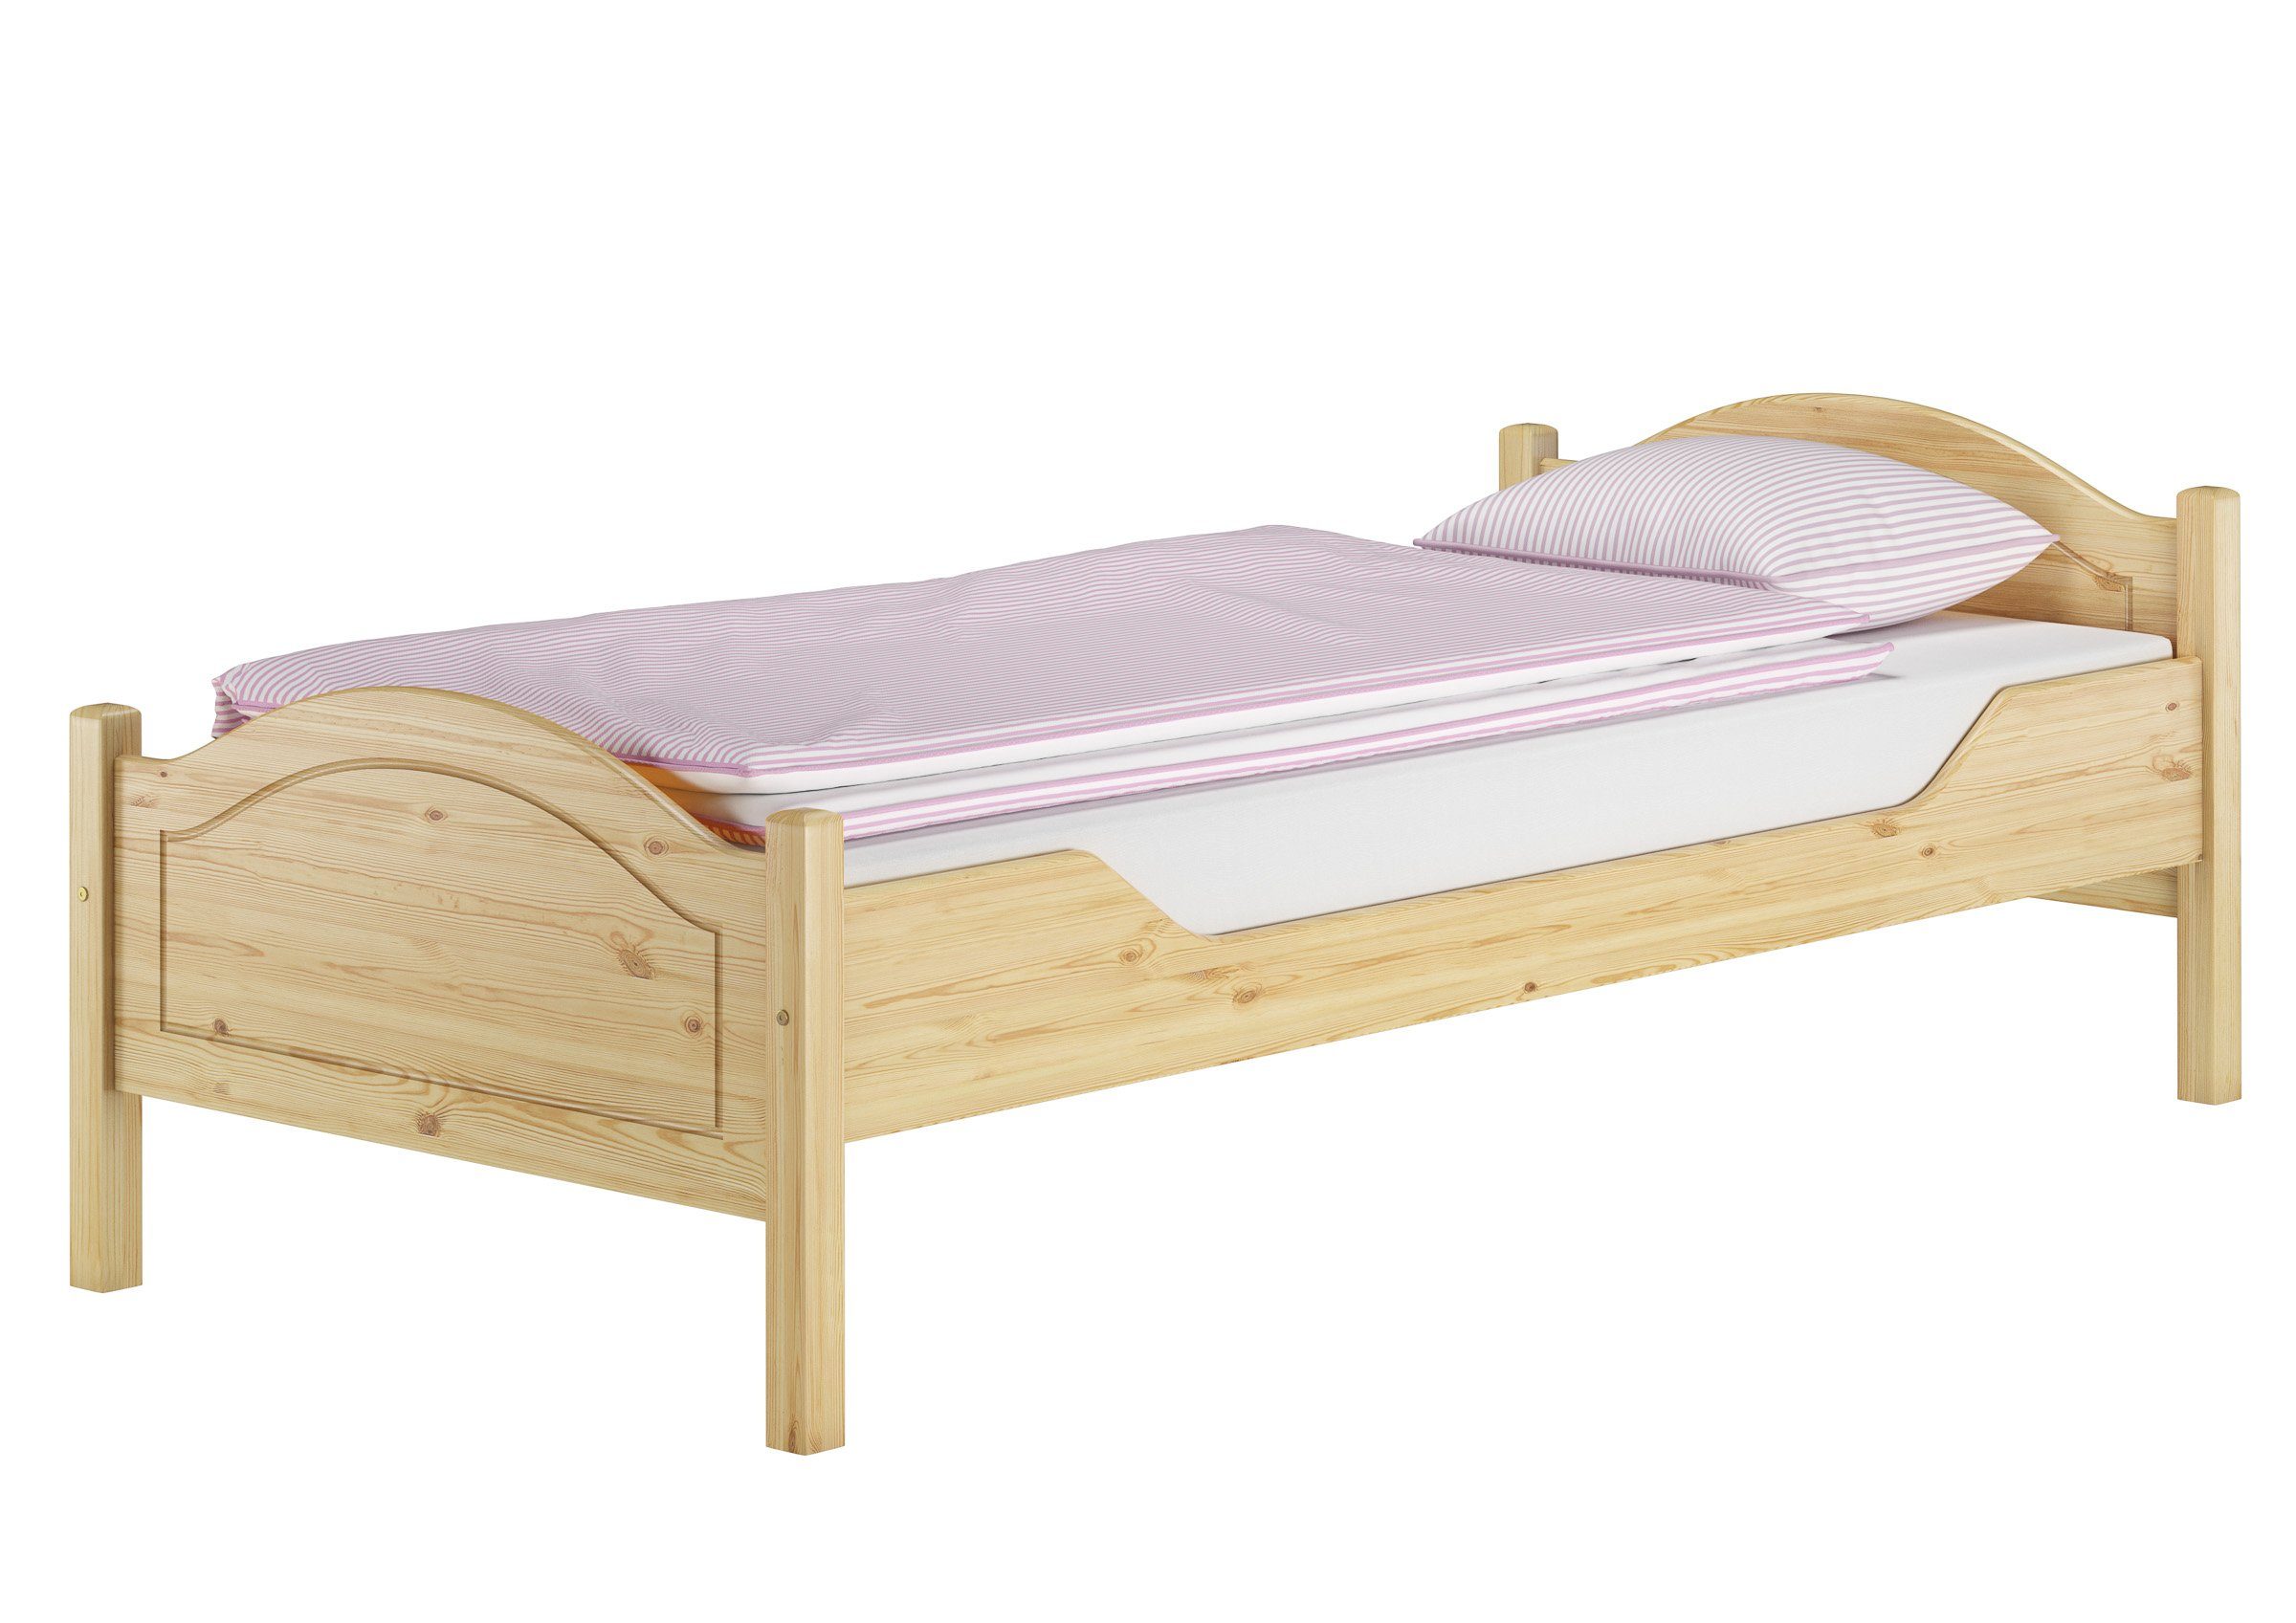 90x200, ERST-HOLZ Massivholz-Einzelbett Bett lackiert Kieferfarblos mit Kiefer Rollrost